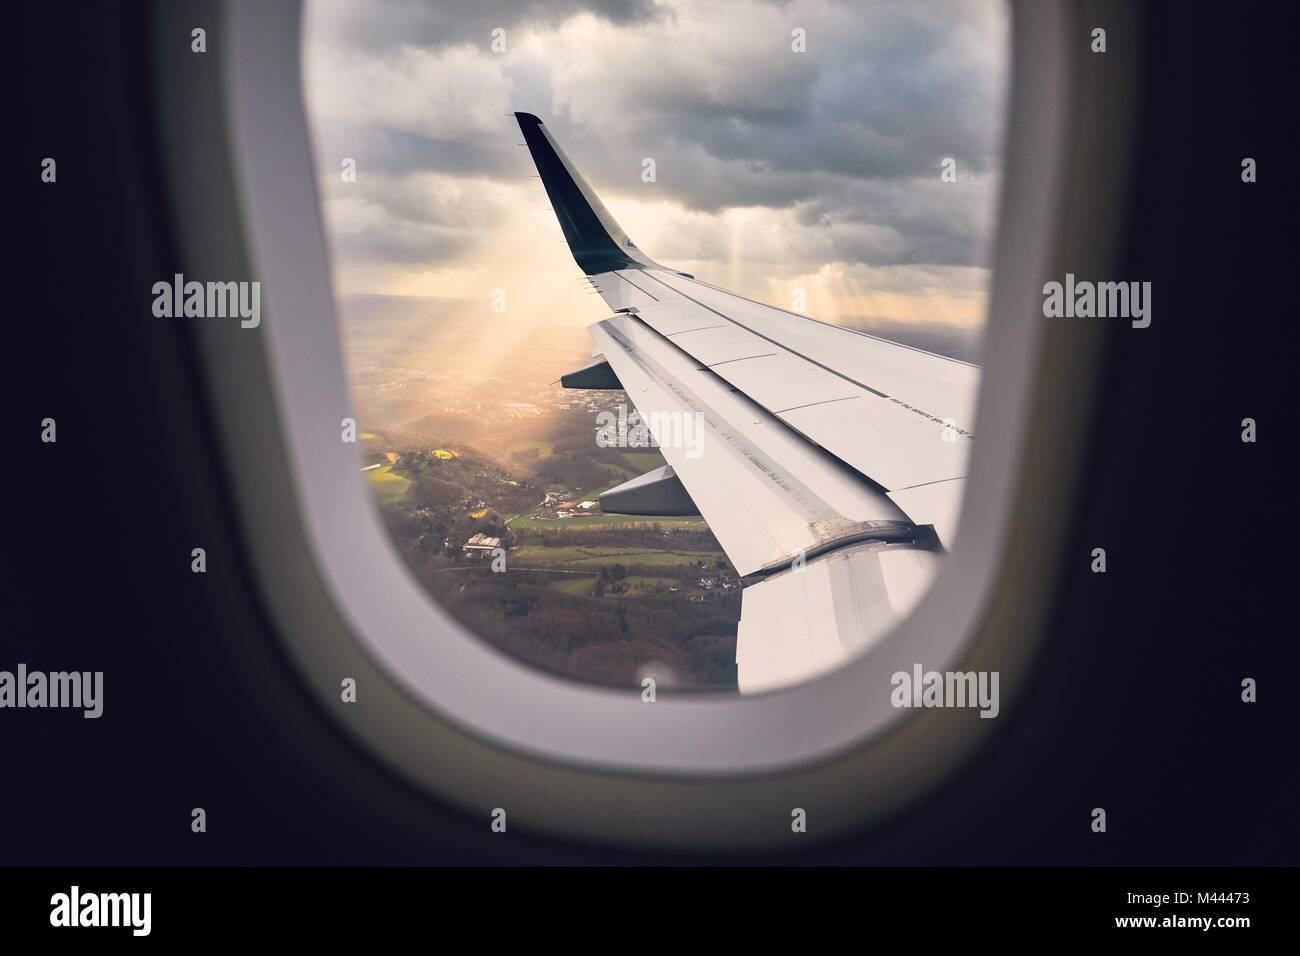 Landung während des Sturms. Blick aus dem Flugzeug Fenster. Stockfoto